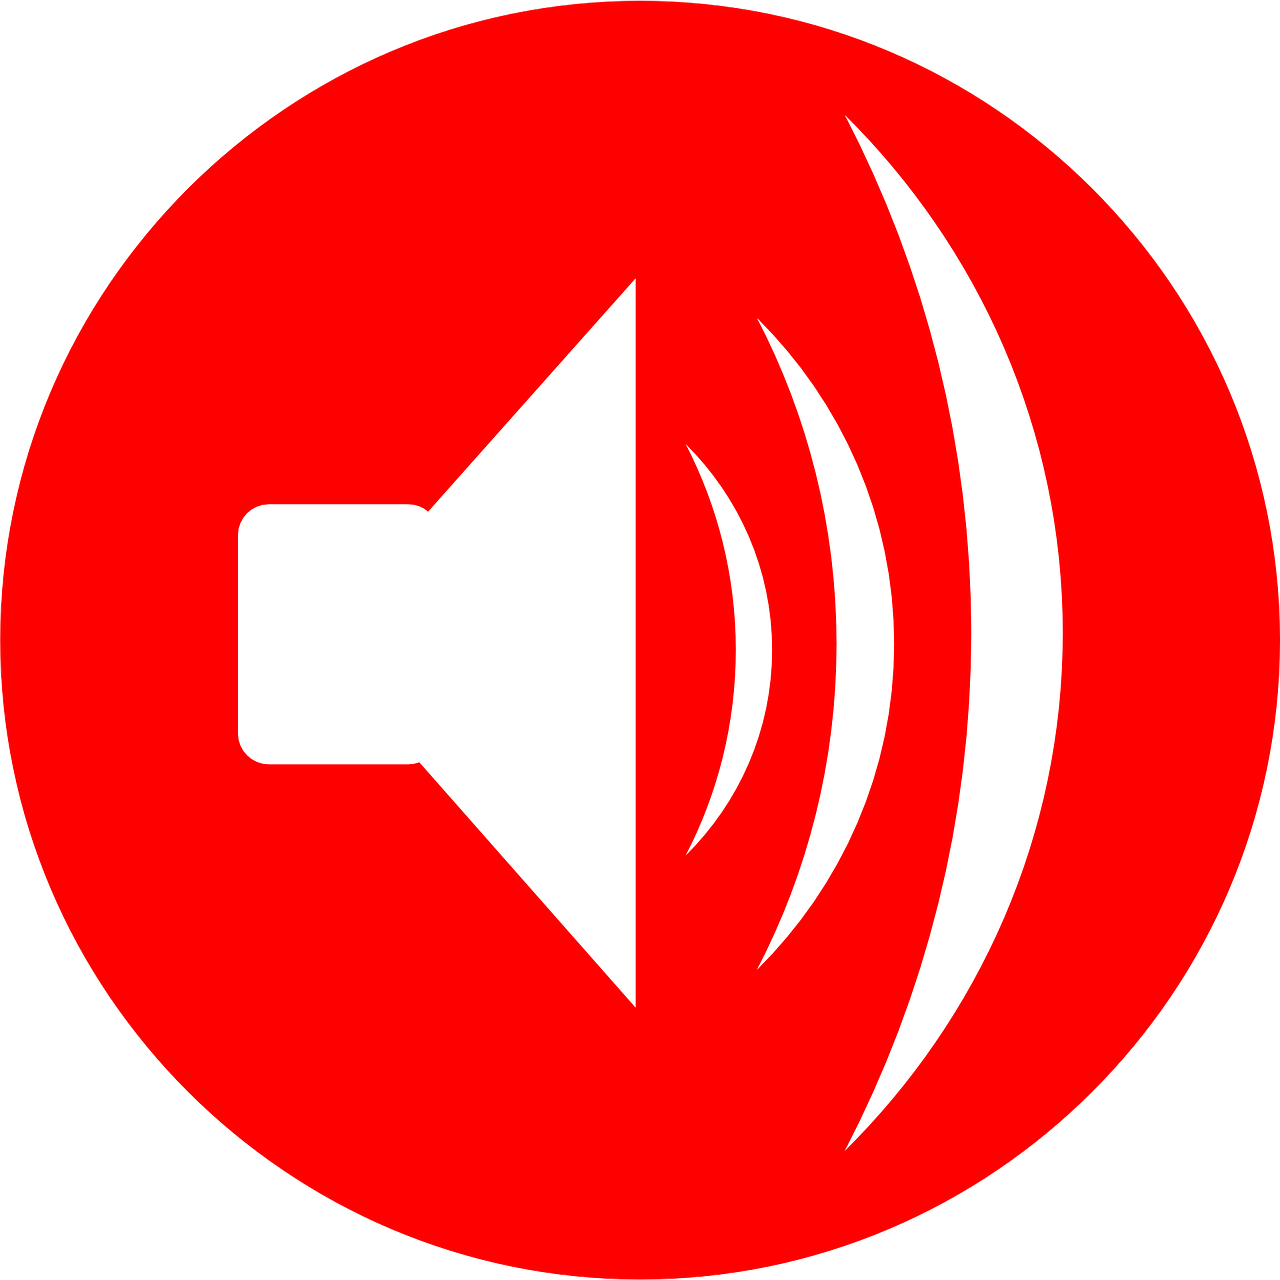 Speaker Audio Sound - Free vector graphic on Pixabay